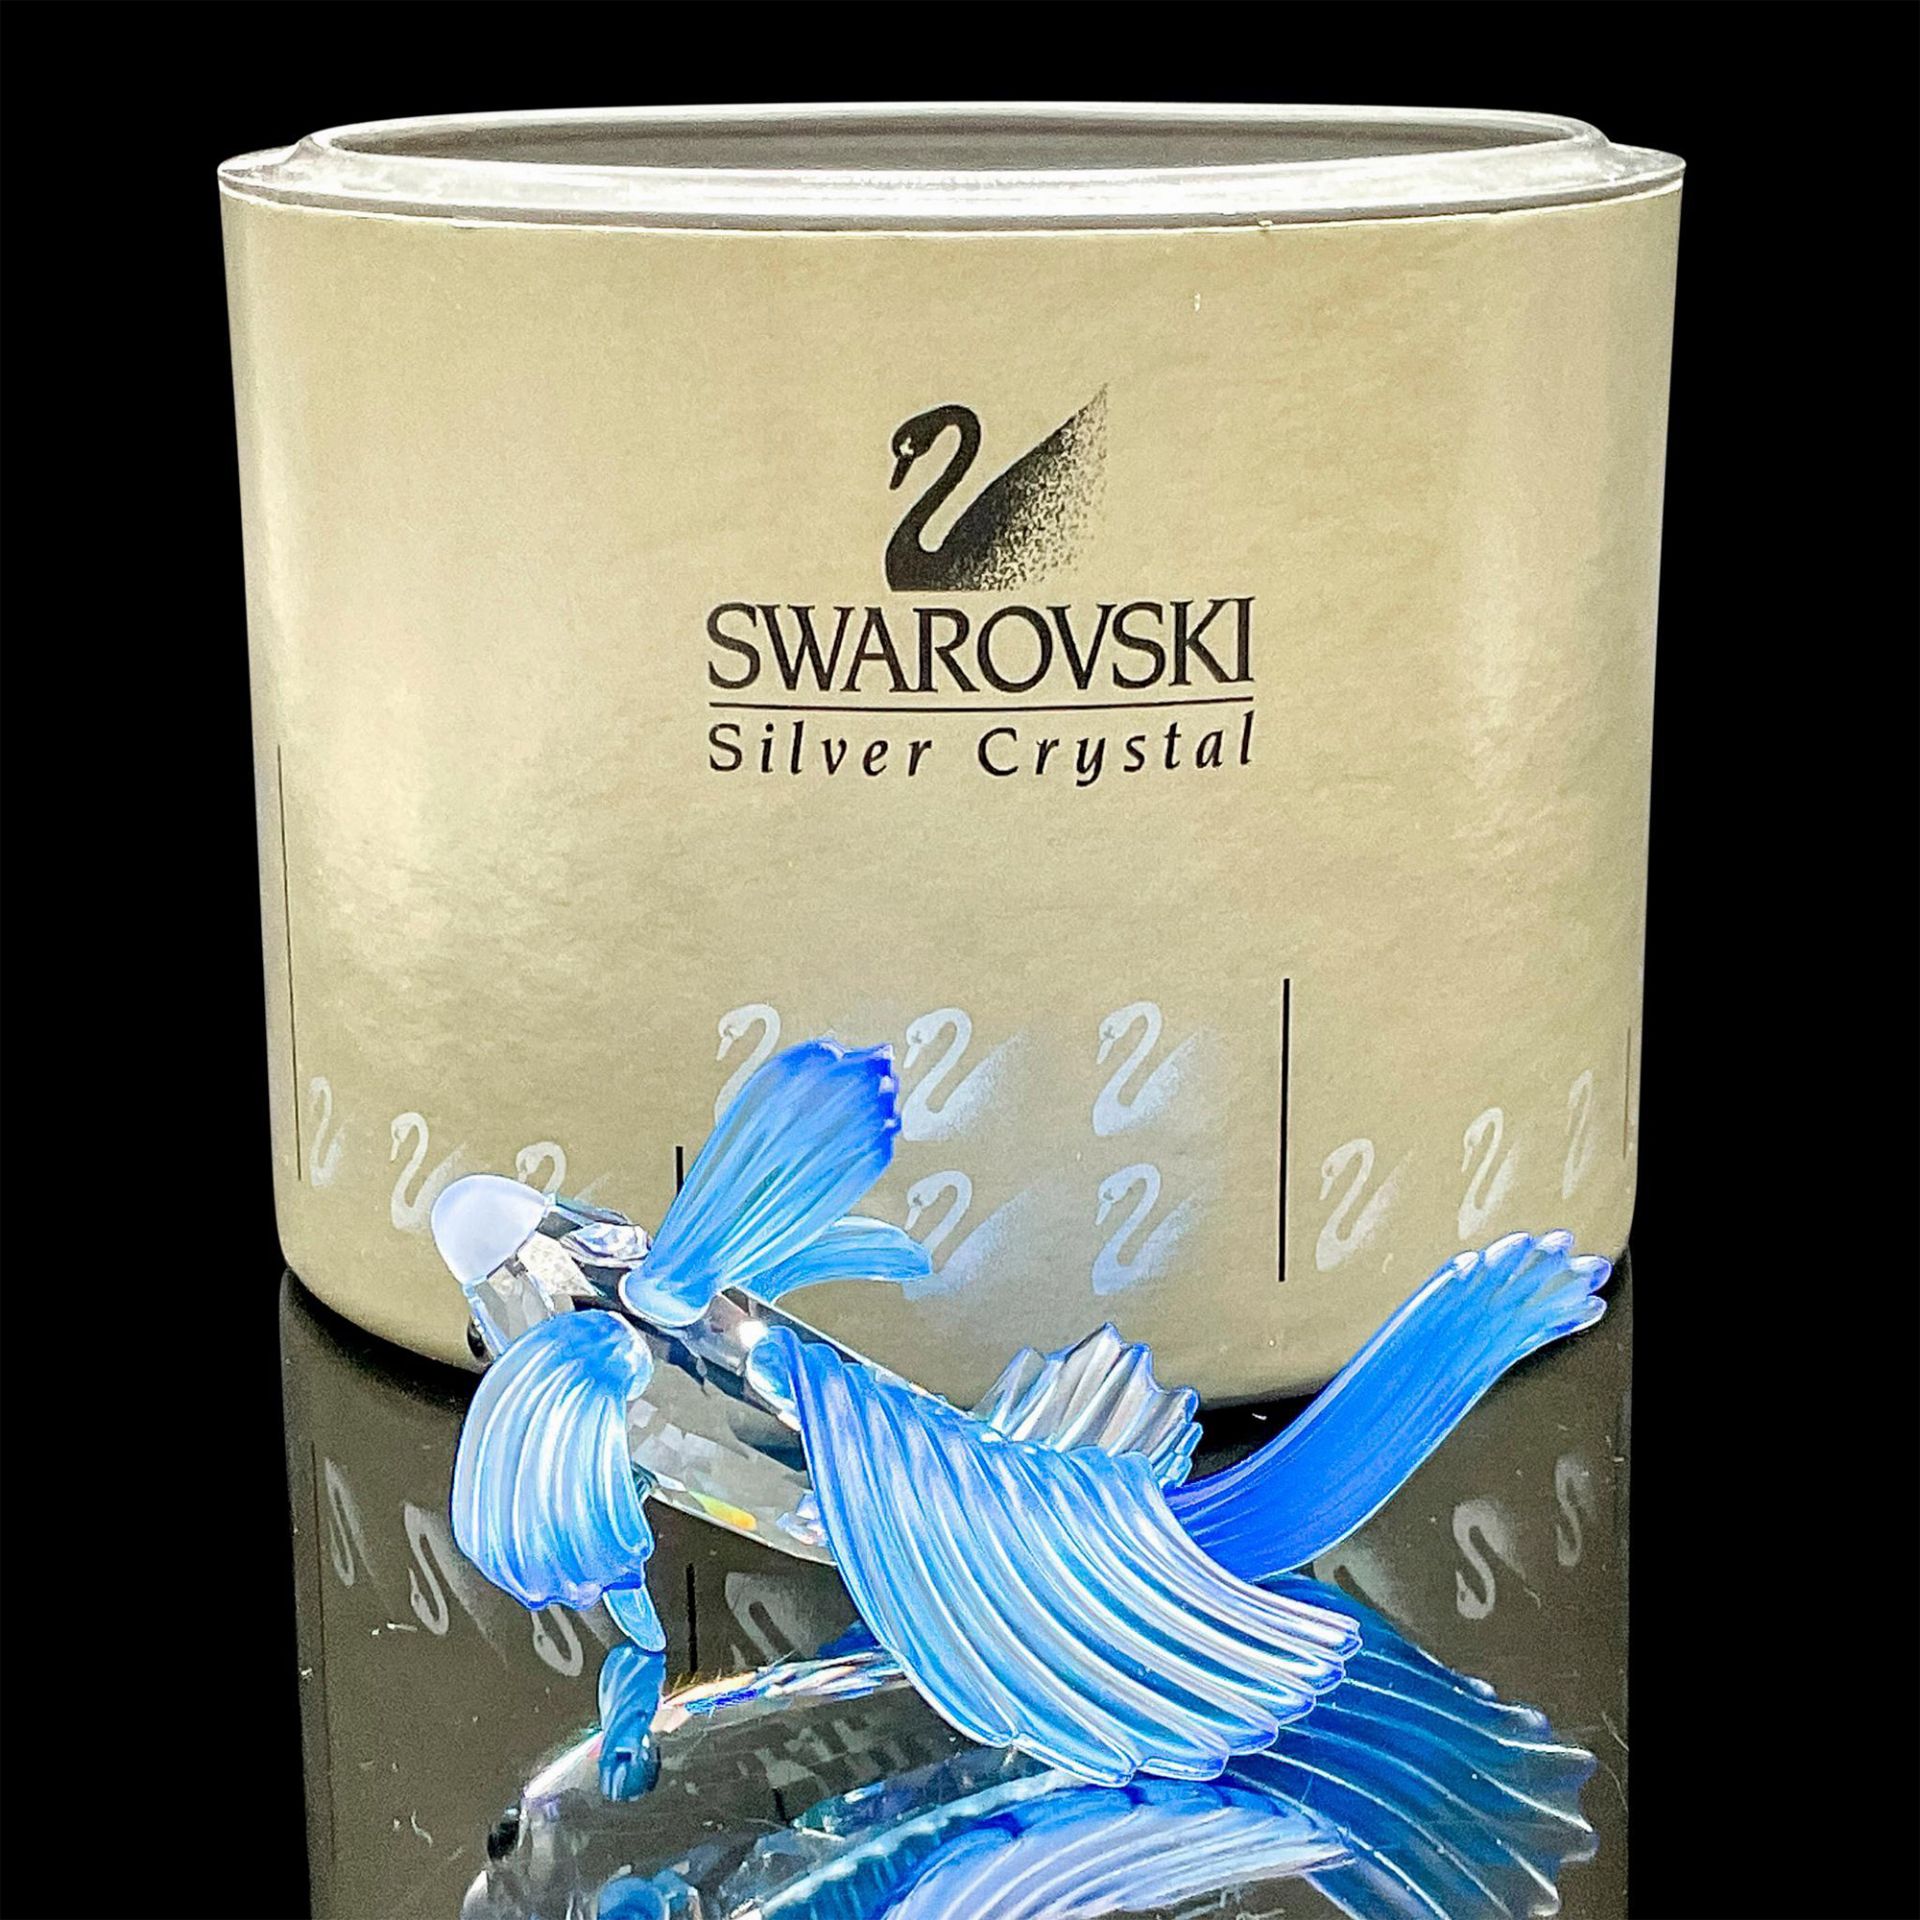 Swarovski Silver Crystal Figurine Siamese Fighting Fish Blue - Image 3 of 3